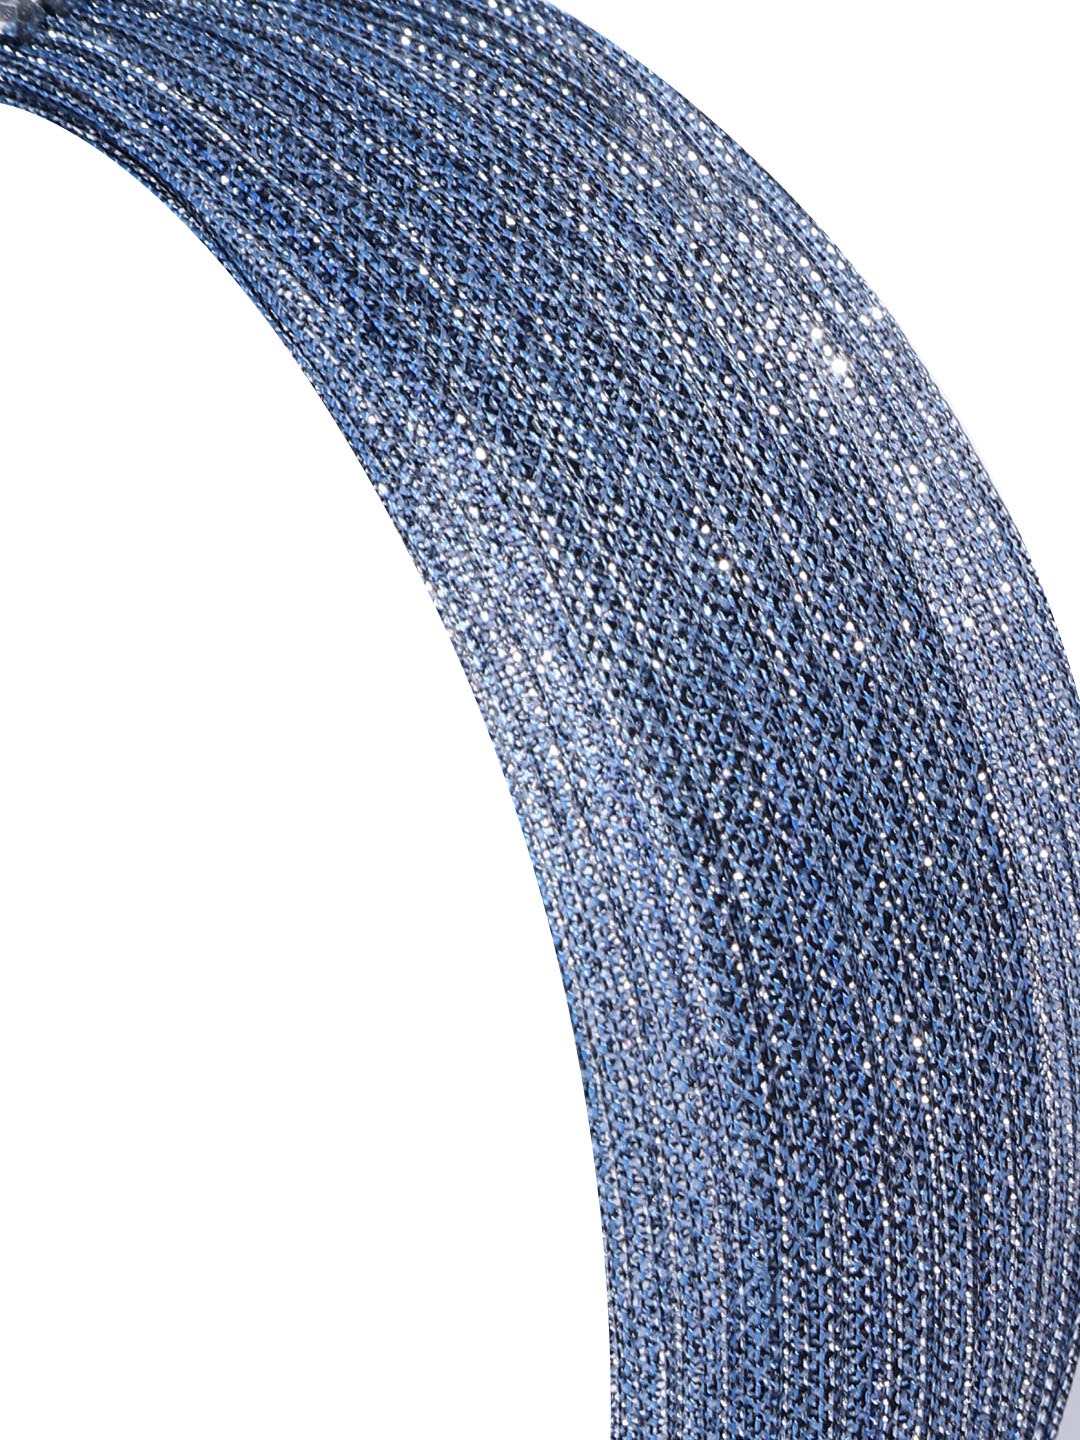 Blueberry blue simar fabric hair band